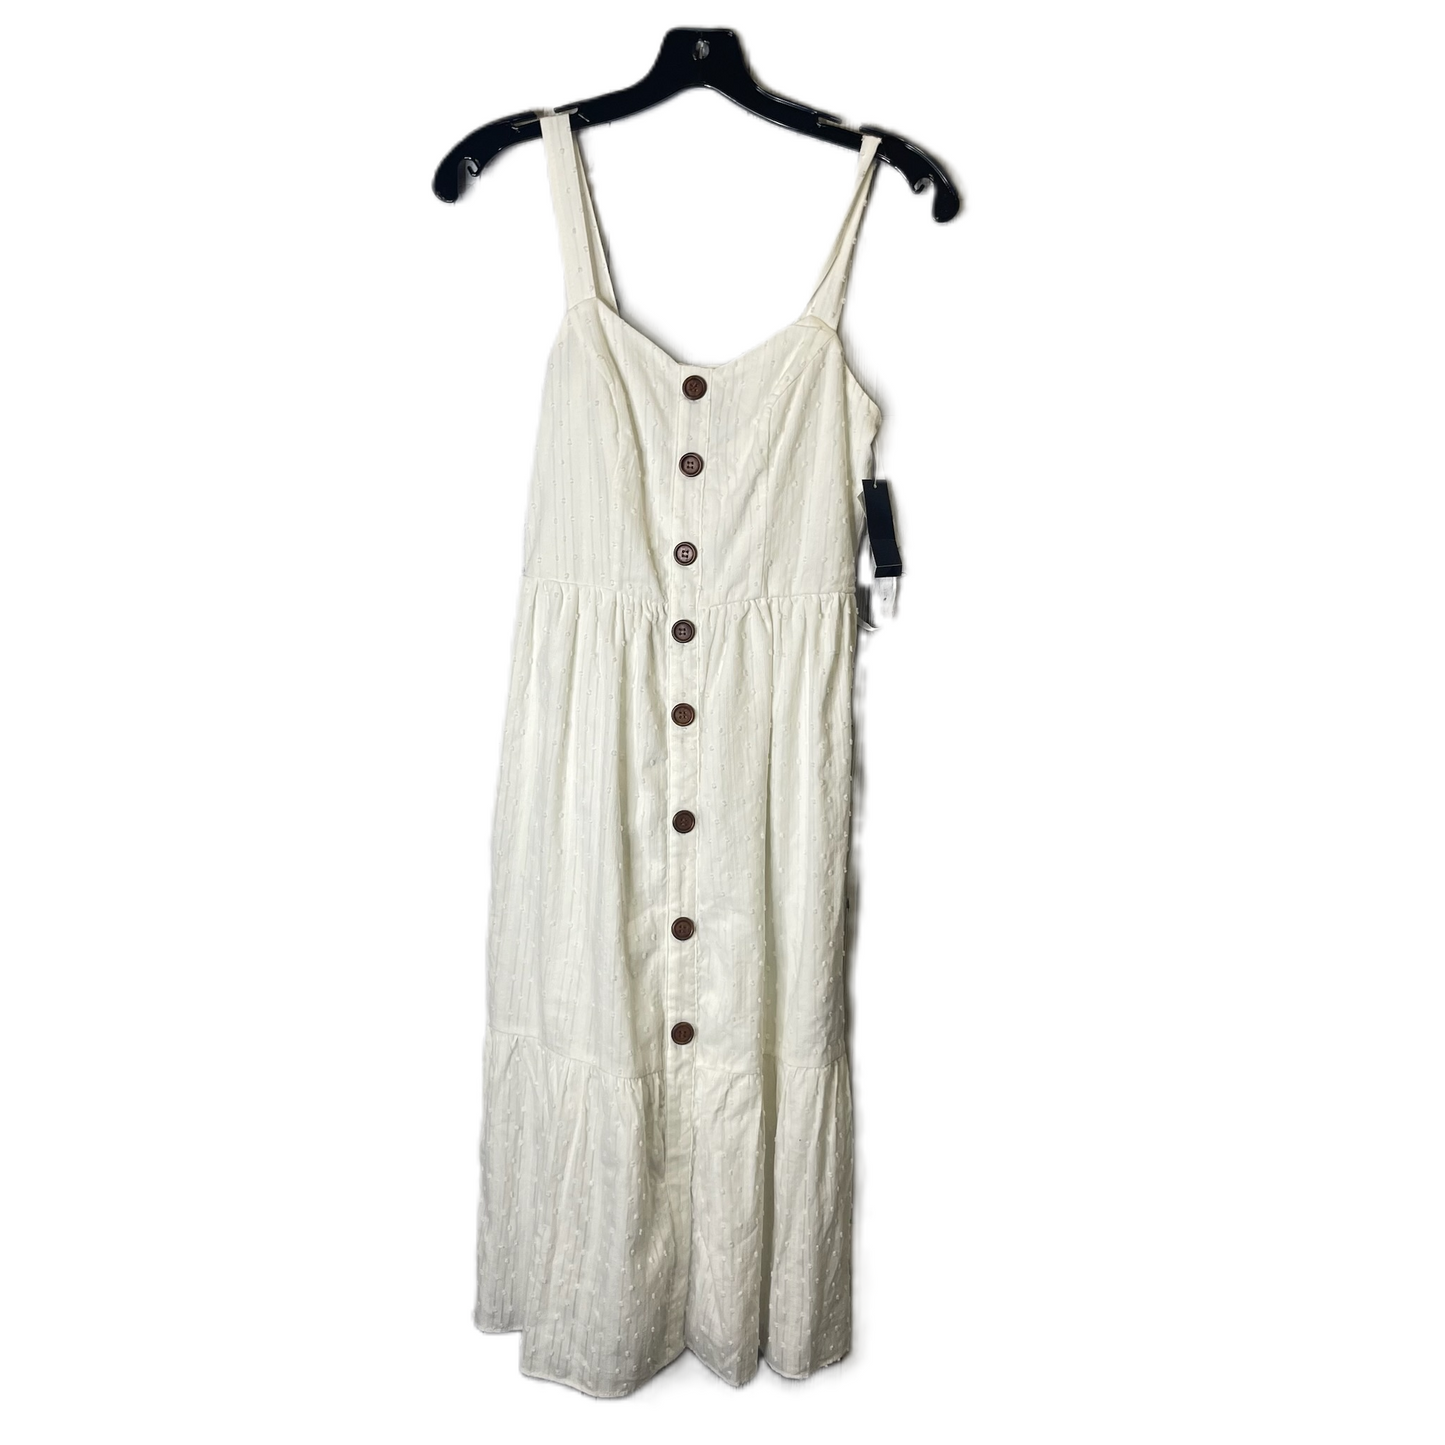 White Dress Casual Short By Iz Byer, Size: Xs